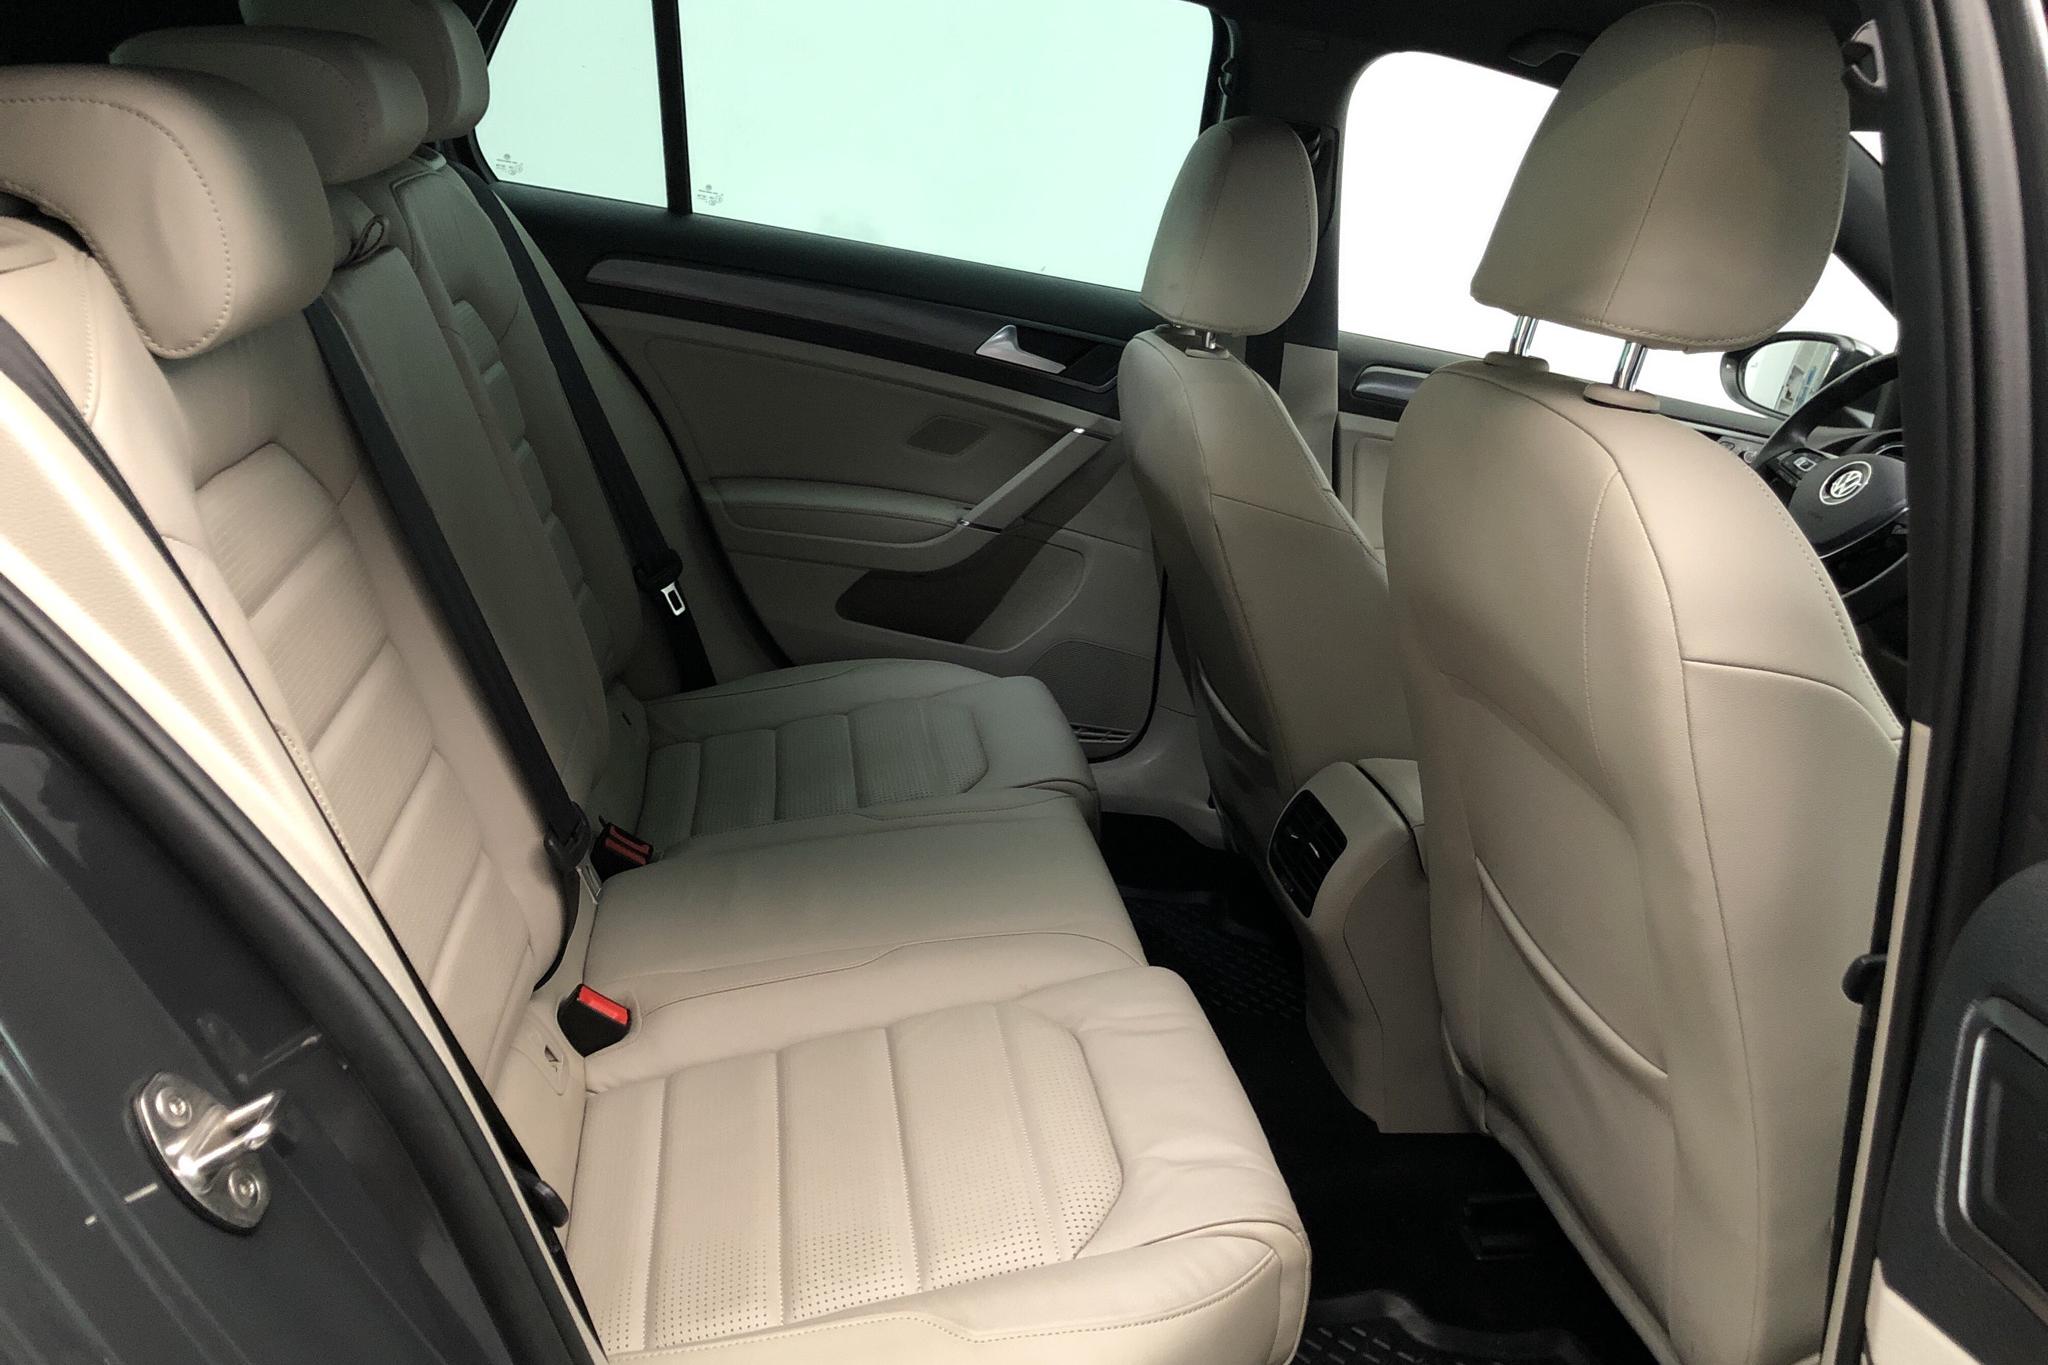 VW e-Golf VII 5dr (136hk) - 90 530 km - Automatic - Dark Grey - 2019